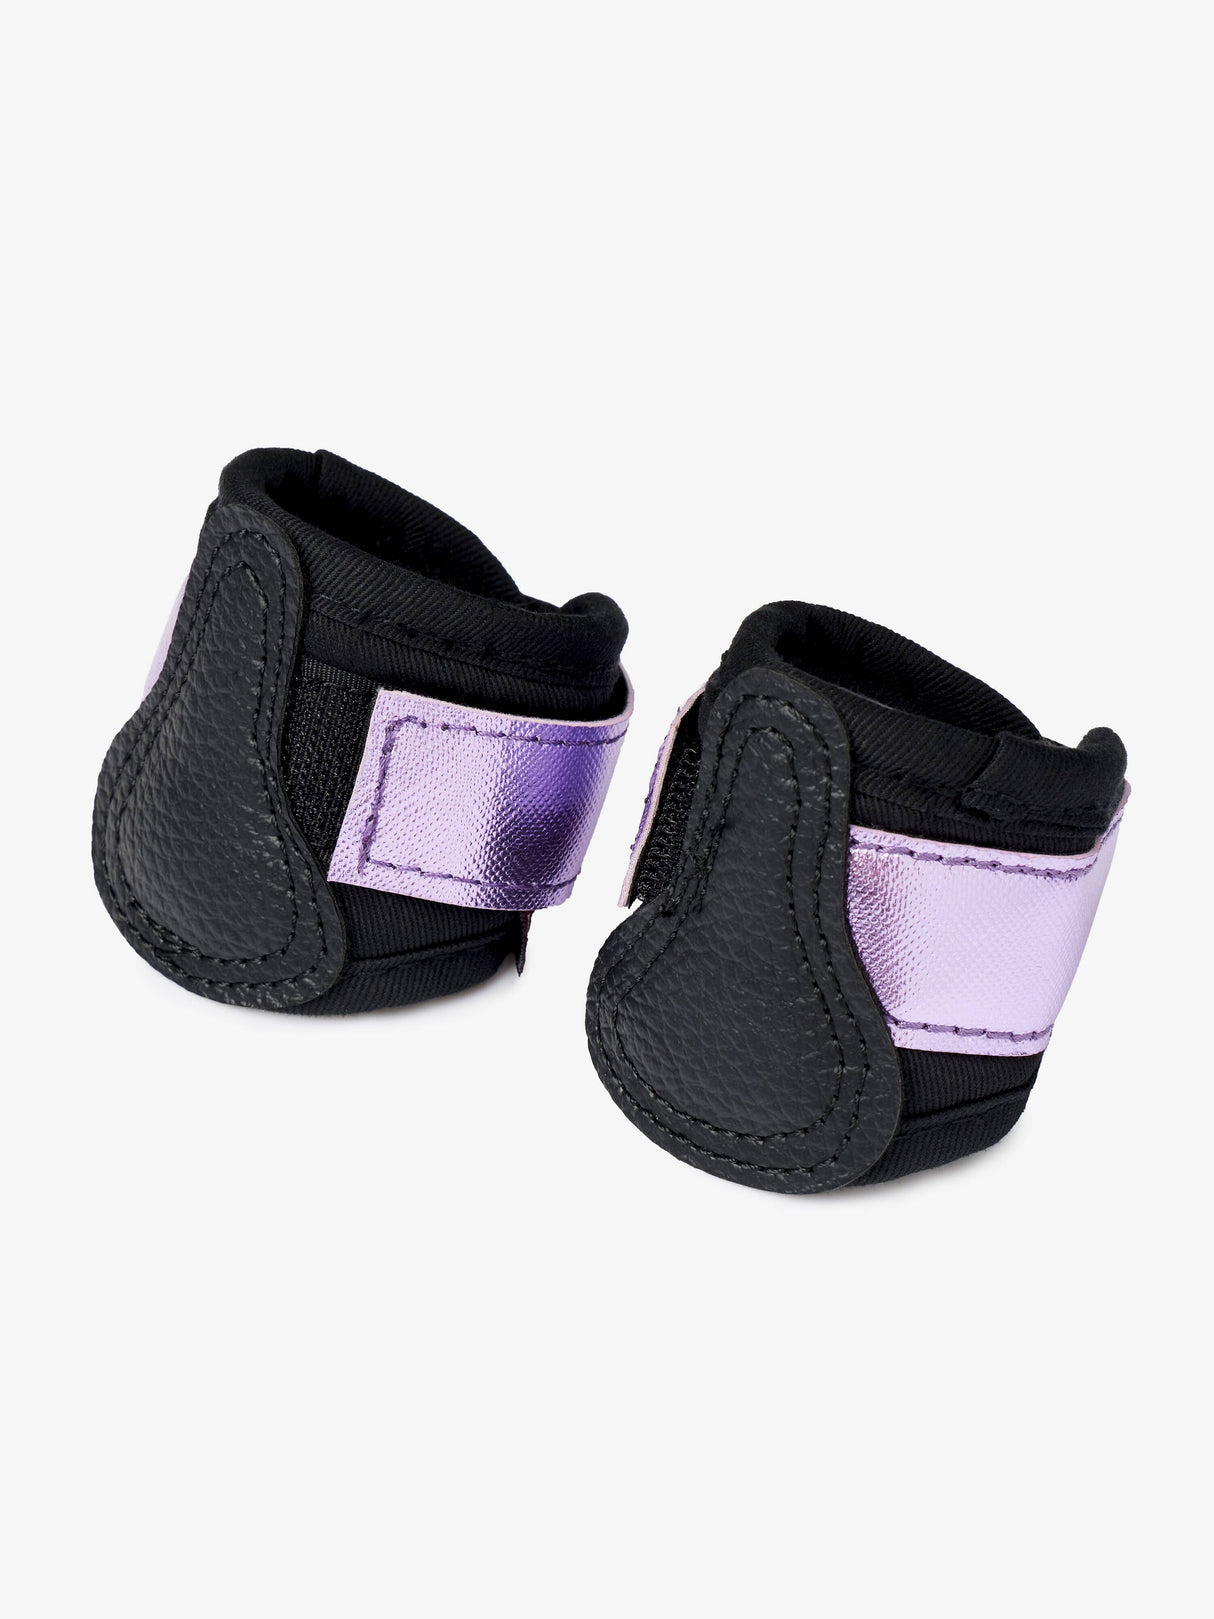 LeMieux Toy Pony Boots Purple Shimmer